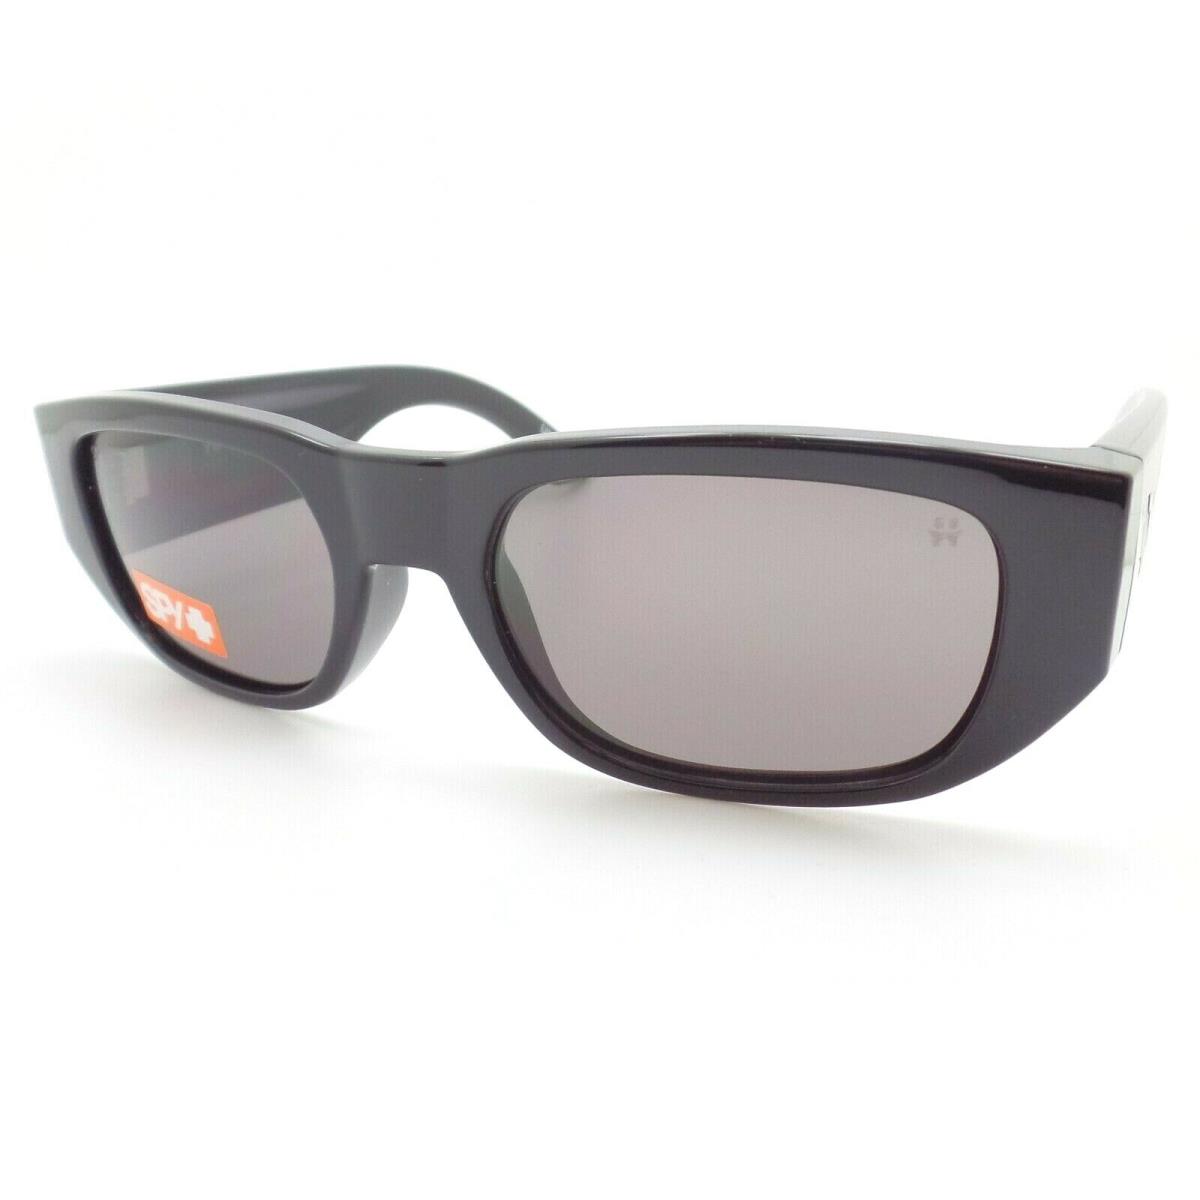 Spy Optics Genre Shiny Black Happy Grey Sunglasses - Frame: Black, Lens: Gray